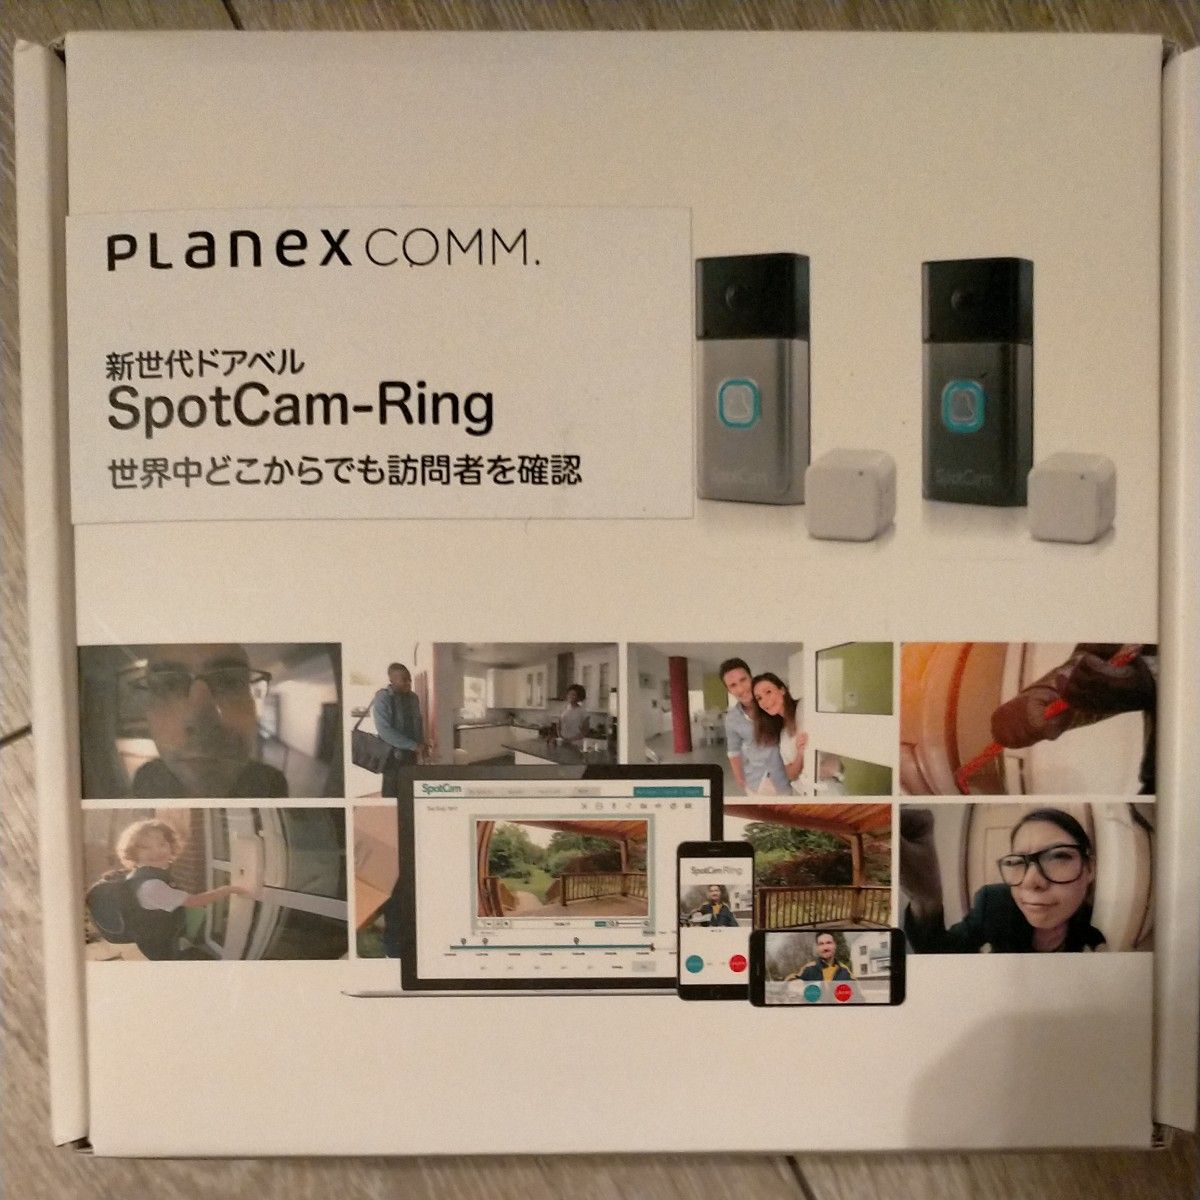 PLANEX 　インターフォン　フルHD 200万画素暗視機能双方向通話モバイルルーター対応 SpotCa